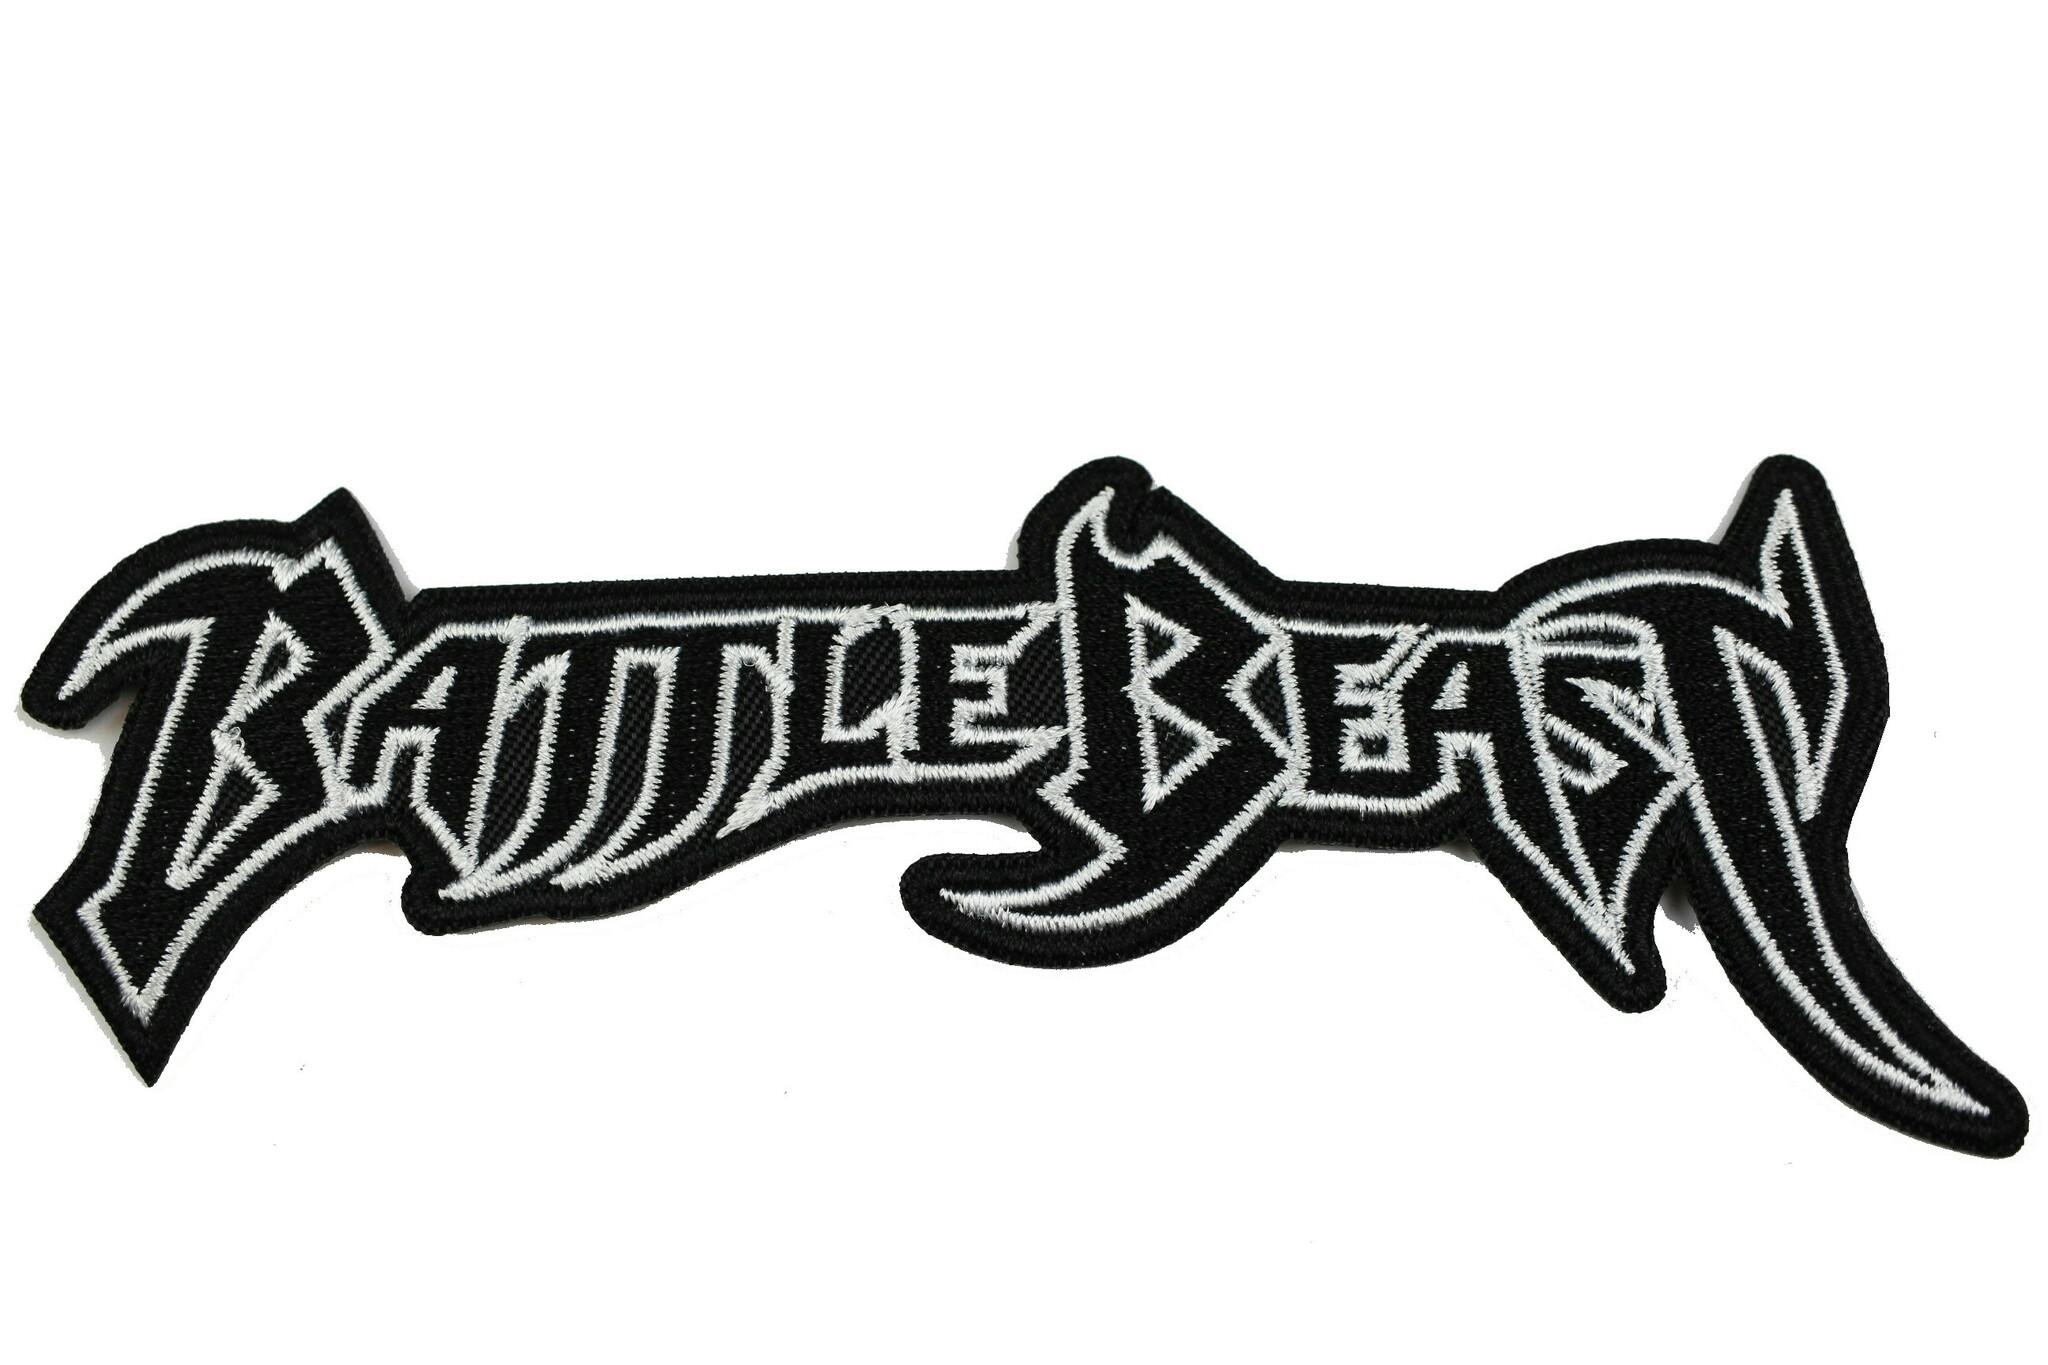 Battle beast logo patch